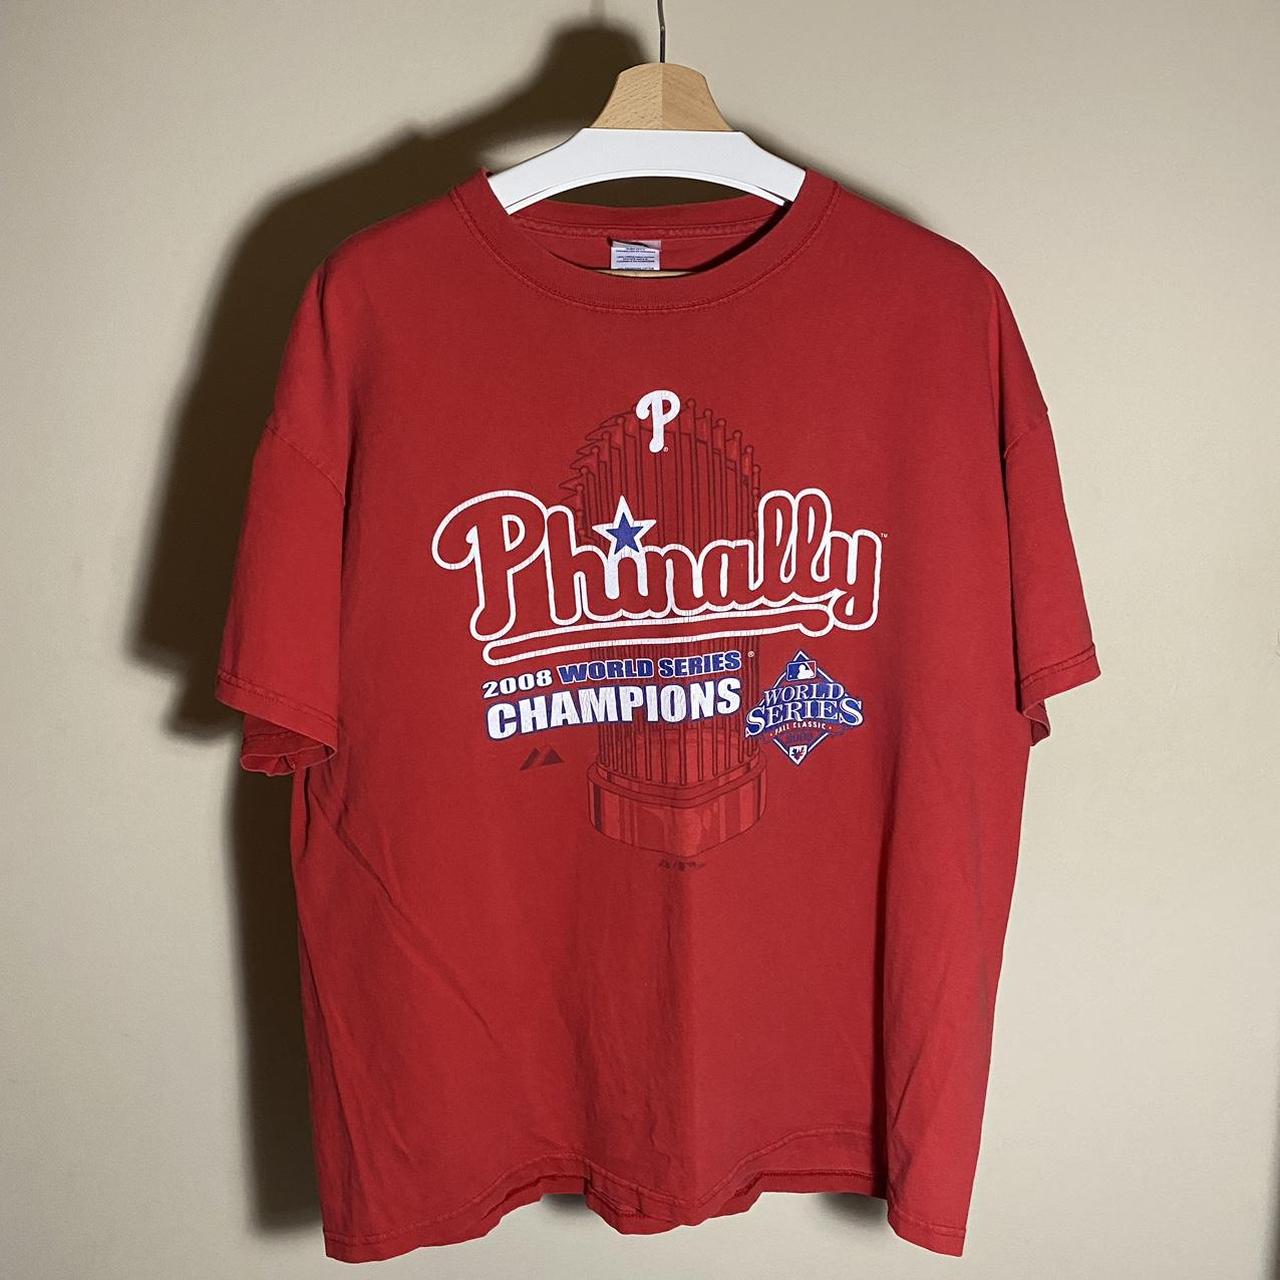 2008 Philadelphia Phillies World Series Champions - Depop